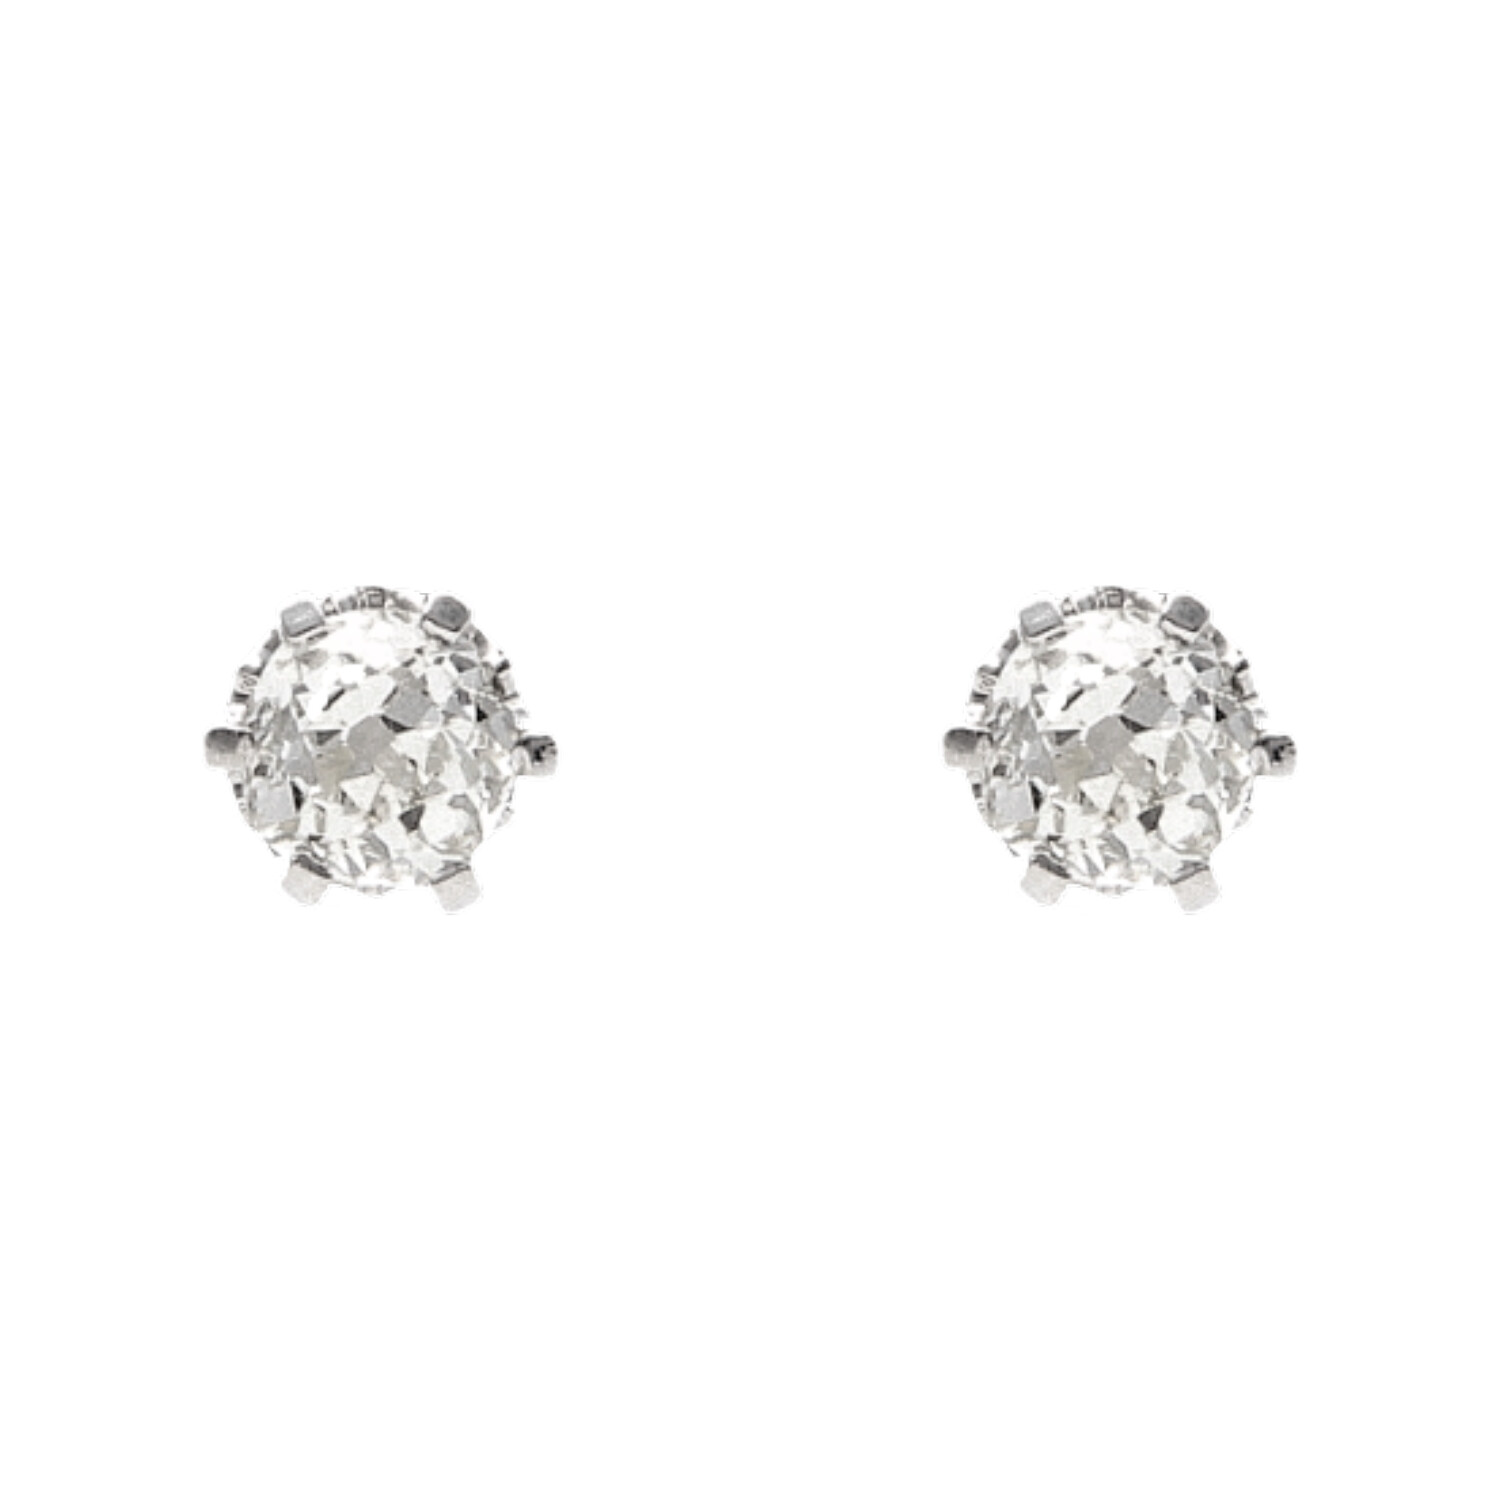 White gold earrings with 1.30 ct. diamonds G/VSI